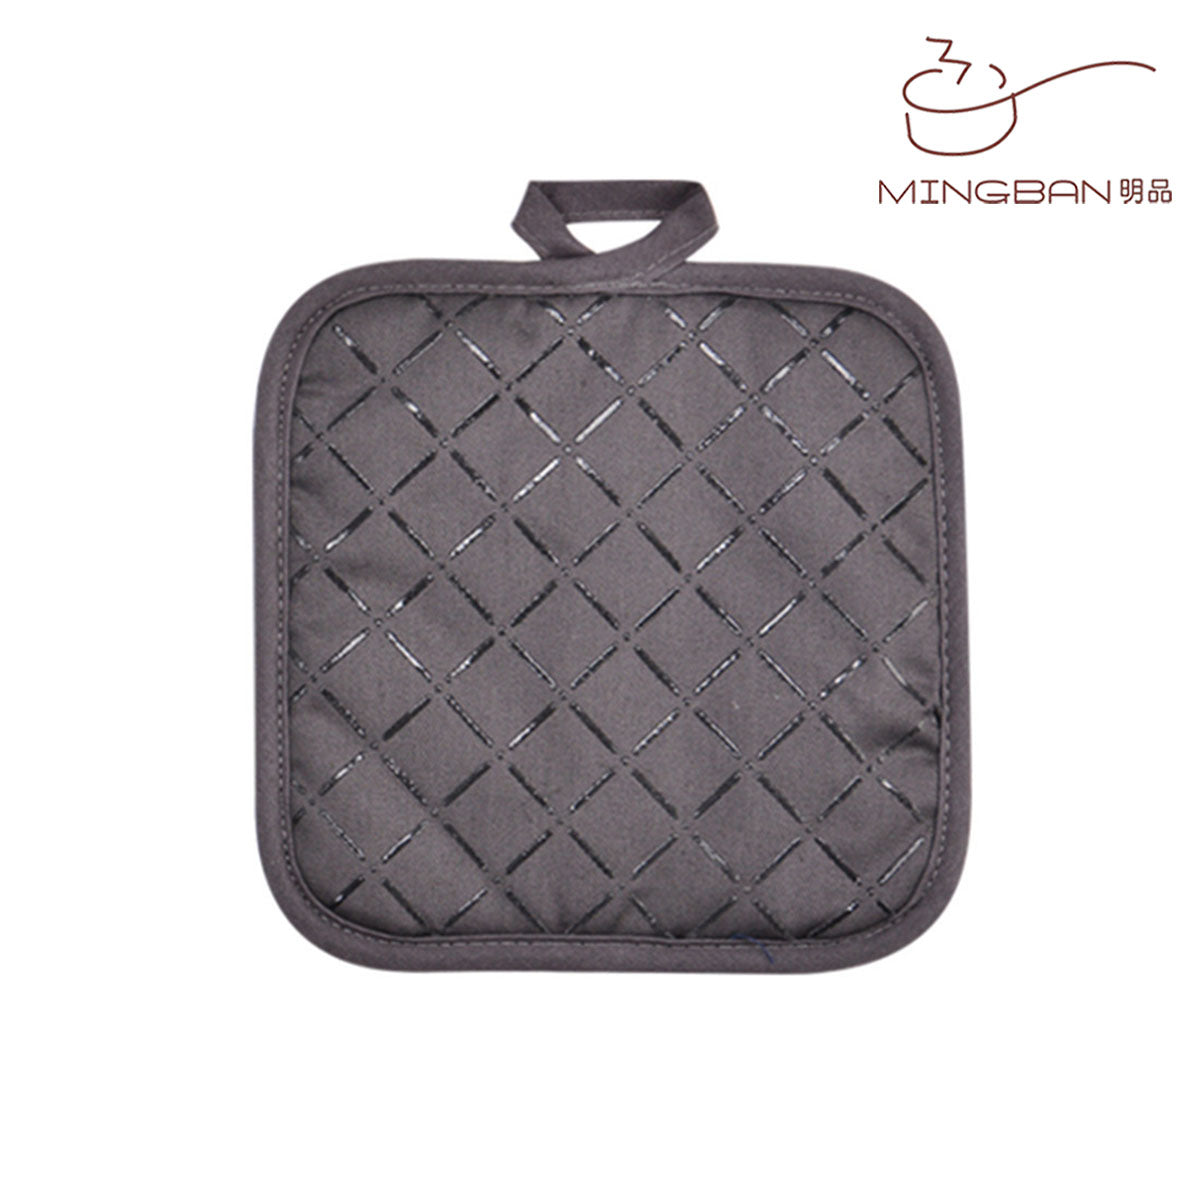 Checkered Silicone Strip Potholder Pad - Grey